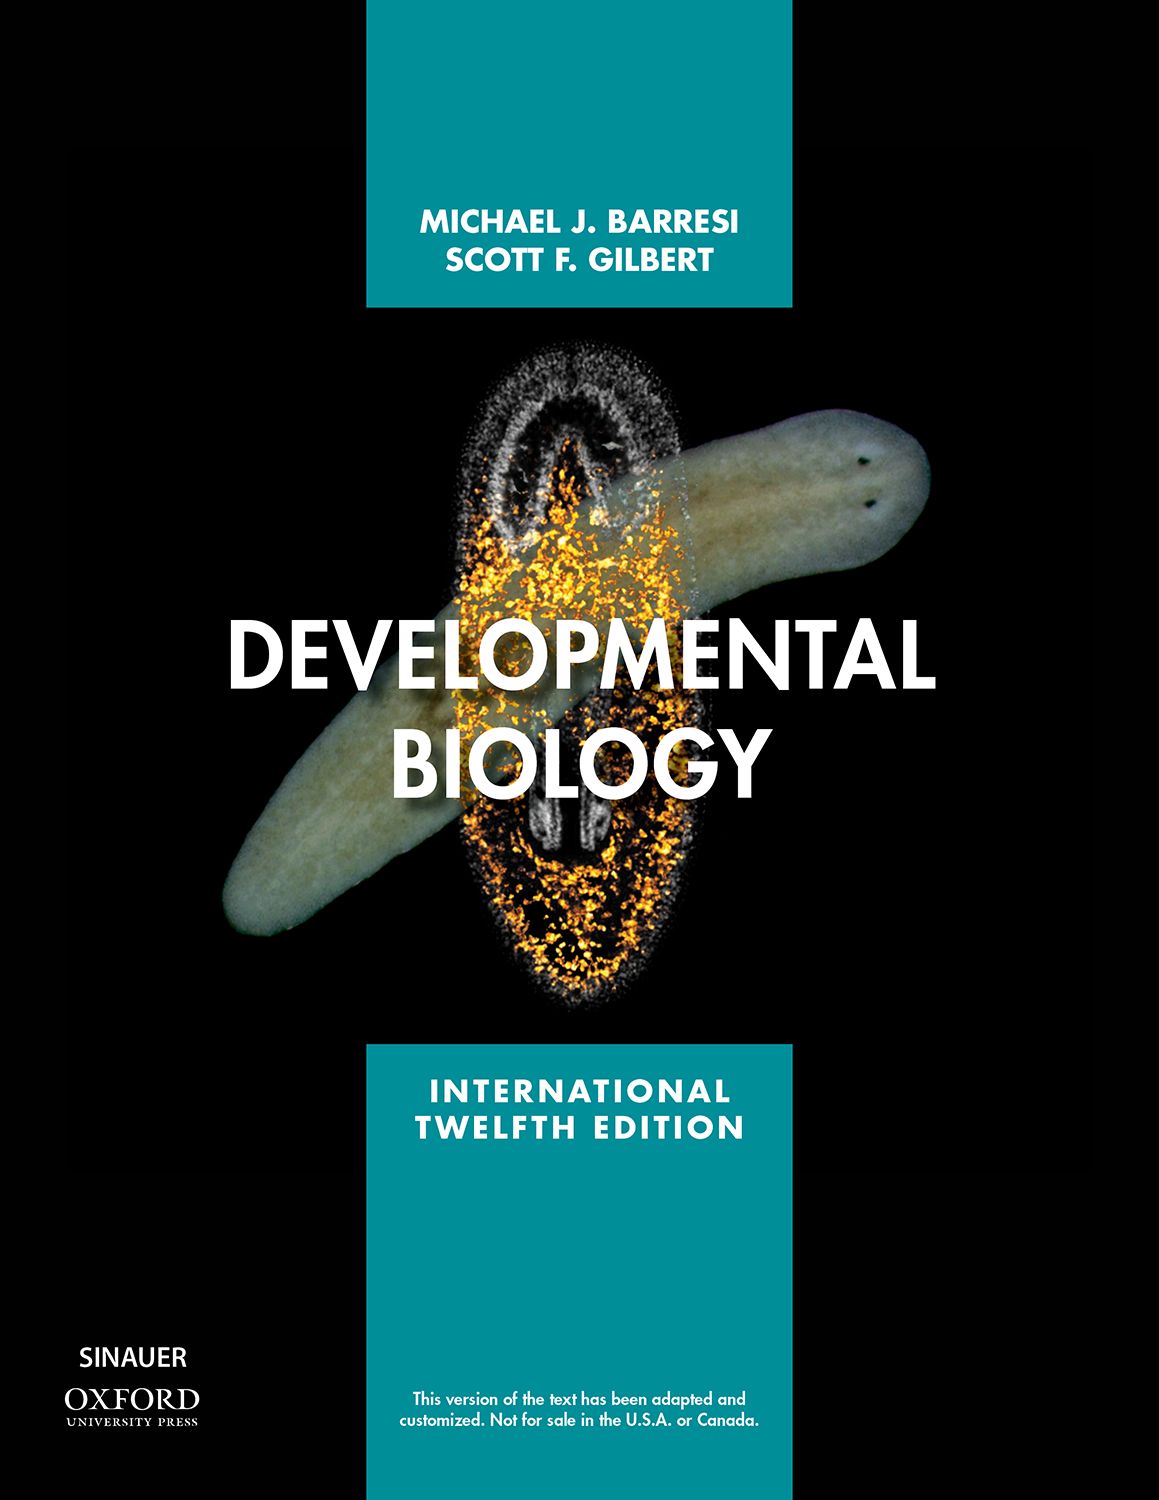 developmental biology research articles